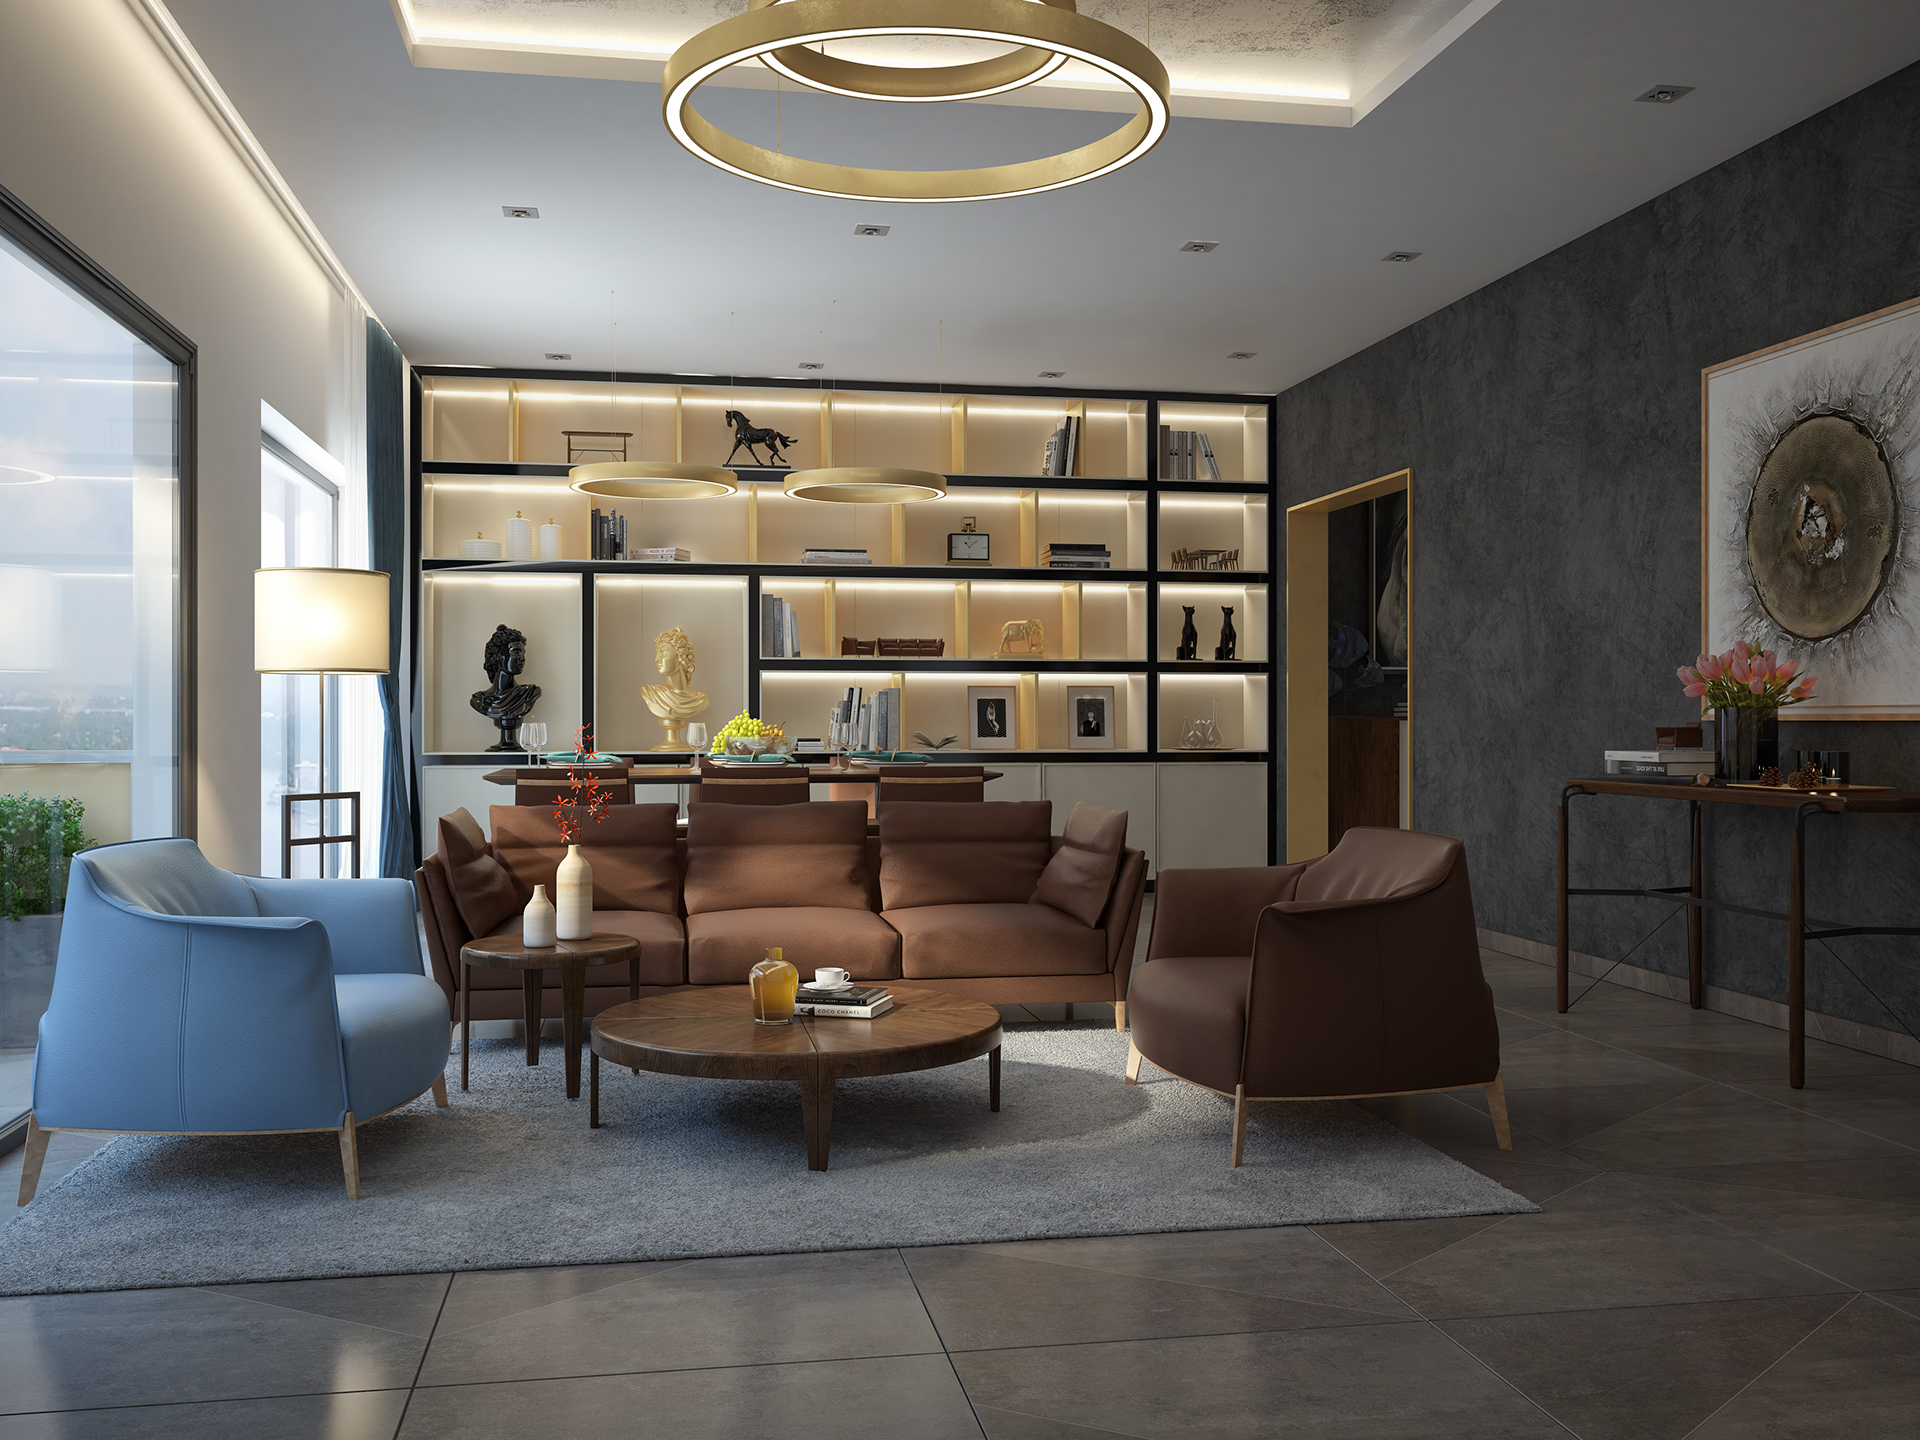 modern living room design "width =" 1920 "height =" 1440 "srcset =" https://mileray.com/wp-content/uploads/2020/05/1588515581_896_Gorgeous-Living-Room-Designs-With-a-Luxury-and-Modern-Interior.jpg 1920w, https://mileray.com / wp -content / uploads / 2016/11 / kien-dinhkien-300x225.jpg 300w, https://mileray.com/wp-content/uploads/2016/11/kien-dinhkien-768x576.jpg 768w, https: / / myfashionos .com / wp-content / uploads / 2016/11 / kien-dinhkien-1024x768.jpg 1024w, https://mileray.com/wp-content/uploads/2016/11/kien-dinhkien-80x60.jpg 80w, https : //mileray.com/wp-content/uploads/2016/11/kien-dinhkien-265x198.jpg 265w, https://mileray.com/wp-content/uploads/2016/11/kien-dinhkien- 696x522. jpg 696w, https://mileray.com/wp-content/uploads/2016/11/kien-dinhkien-1068x801.jpg 1068w, https://mileray.com/wp-content/uploads/2016/11/ kien- dinhkien-560x420.jpg 560w "sizes =" (maximum width: 1920px) 100vw, 1920px